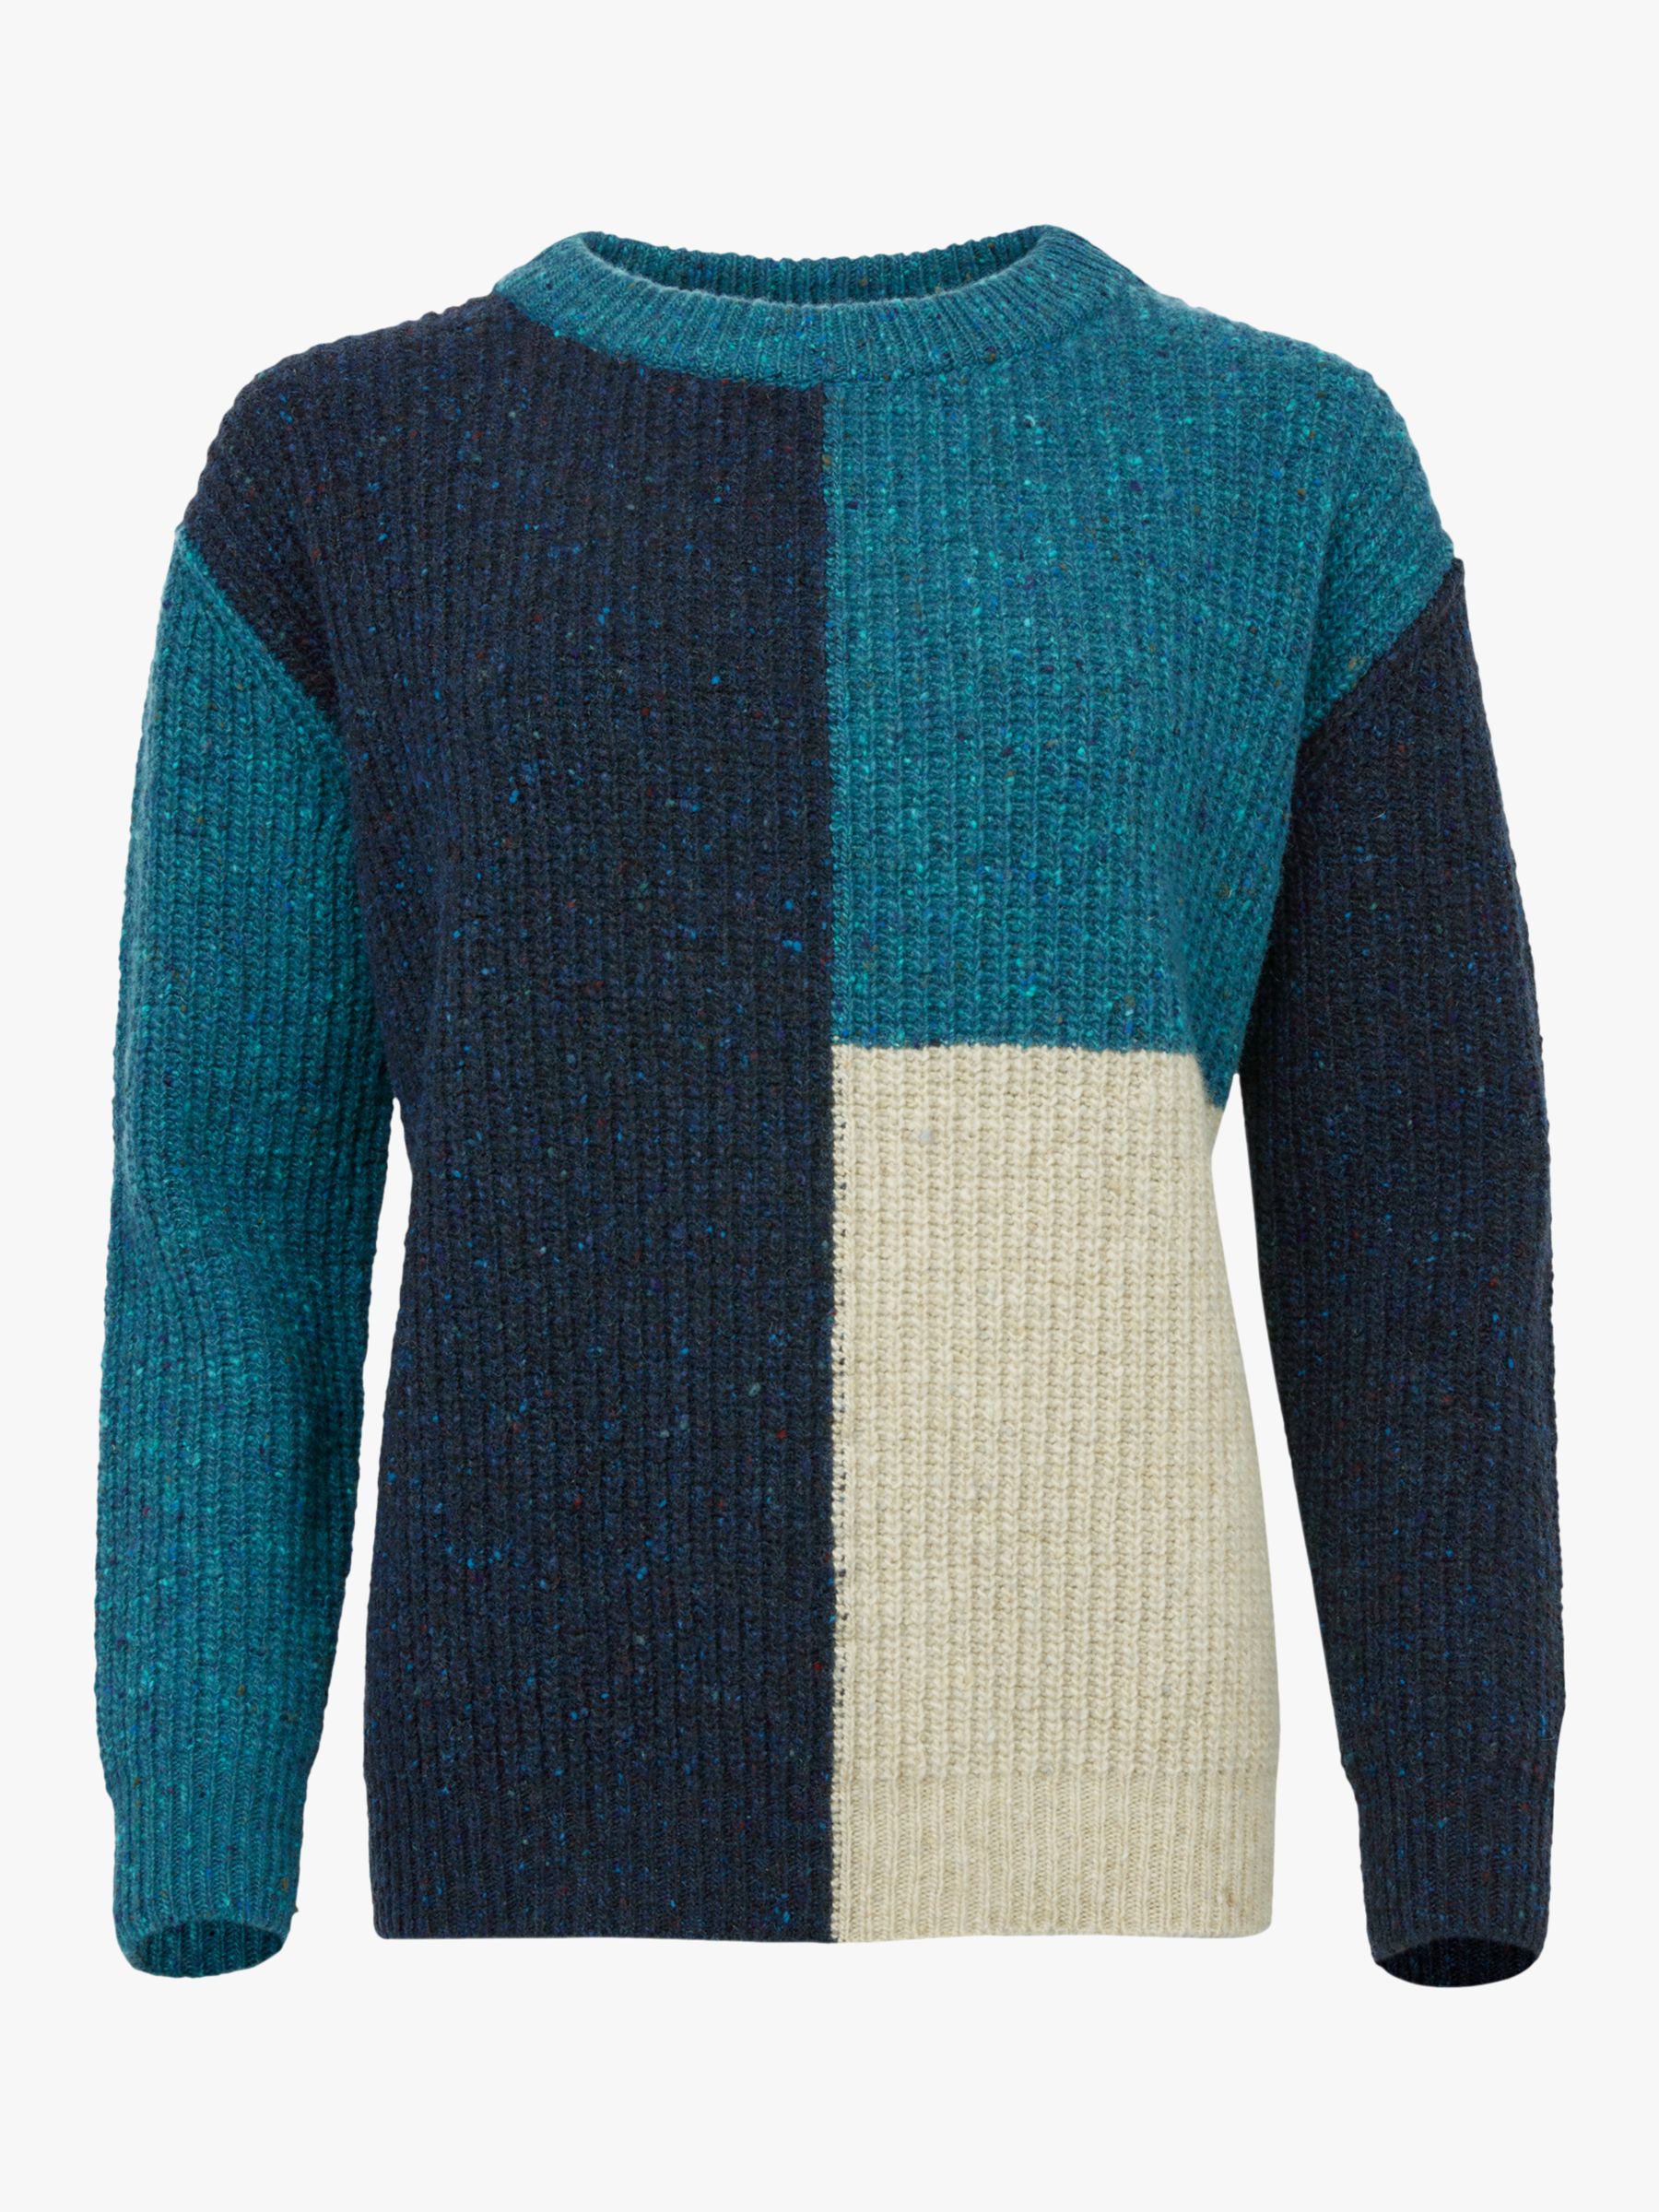 Celtic & Co. Colourblock Wool Jumper, Navy/Multi, XS